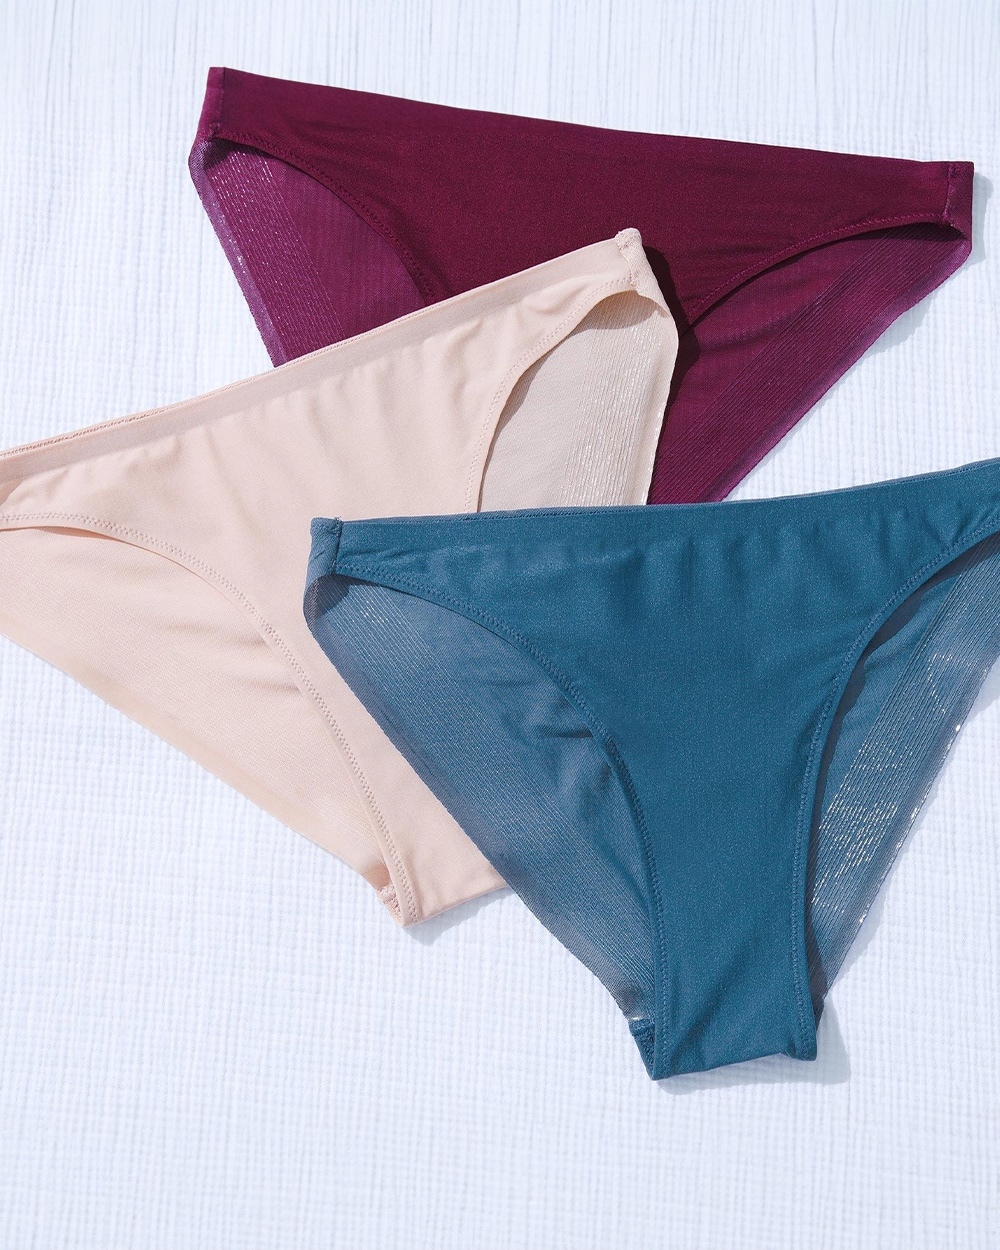 Shop Women's Intimate Clothing - Bras, Panties, Sleepwear, Apparel & More -  Soma